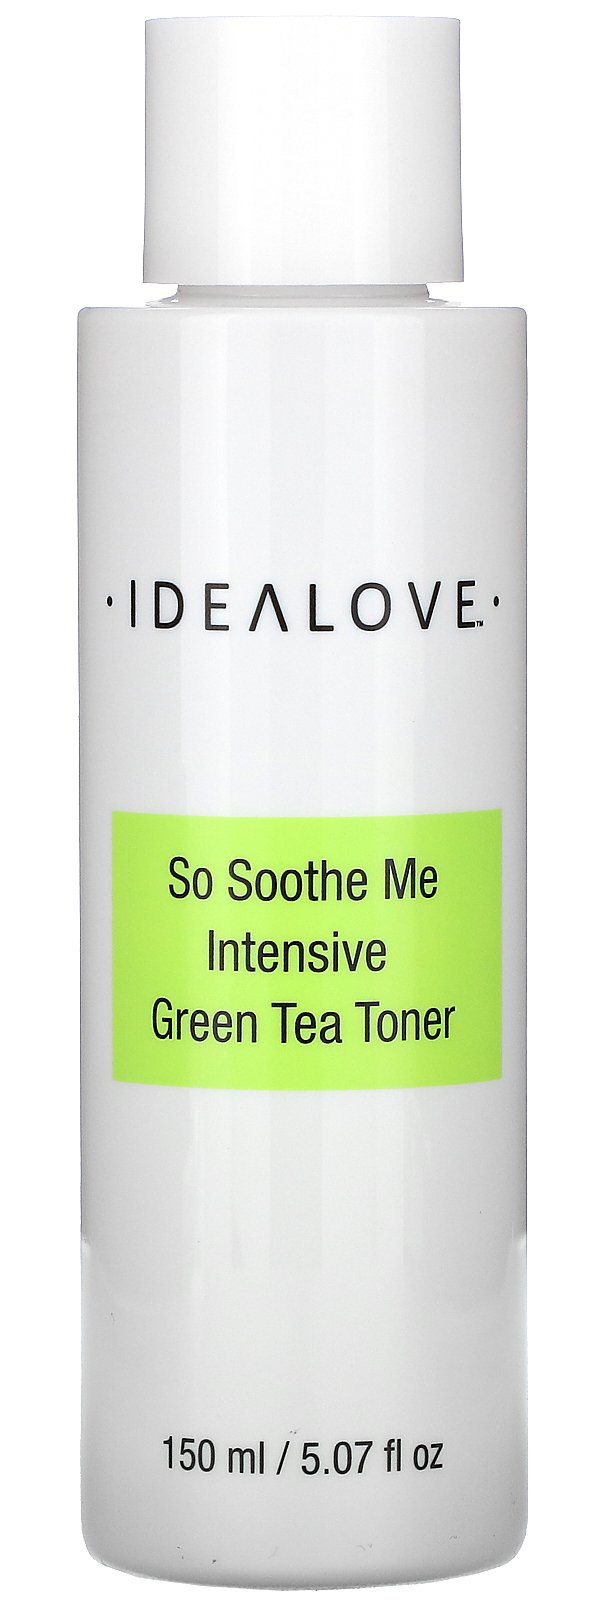 Idealove So Soothe Me, Intensive Green Tea Toner